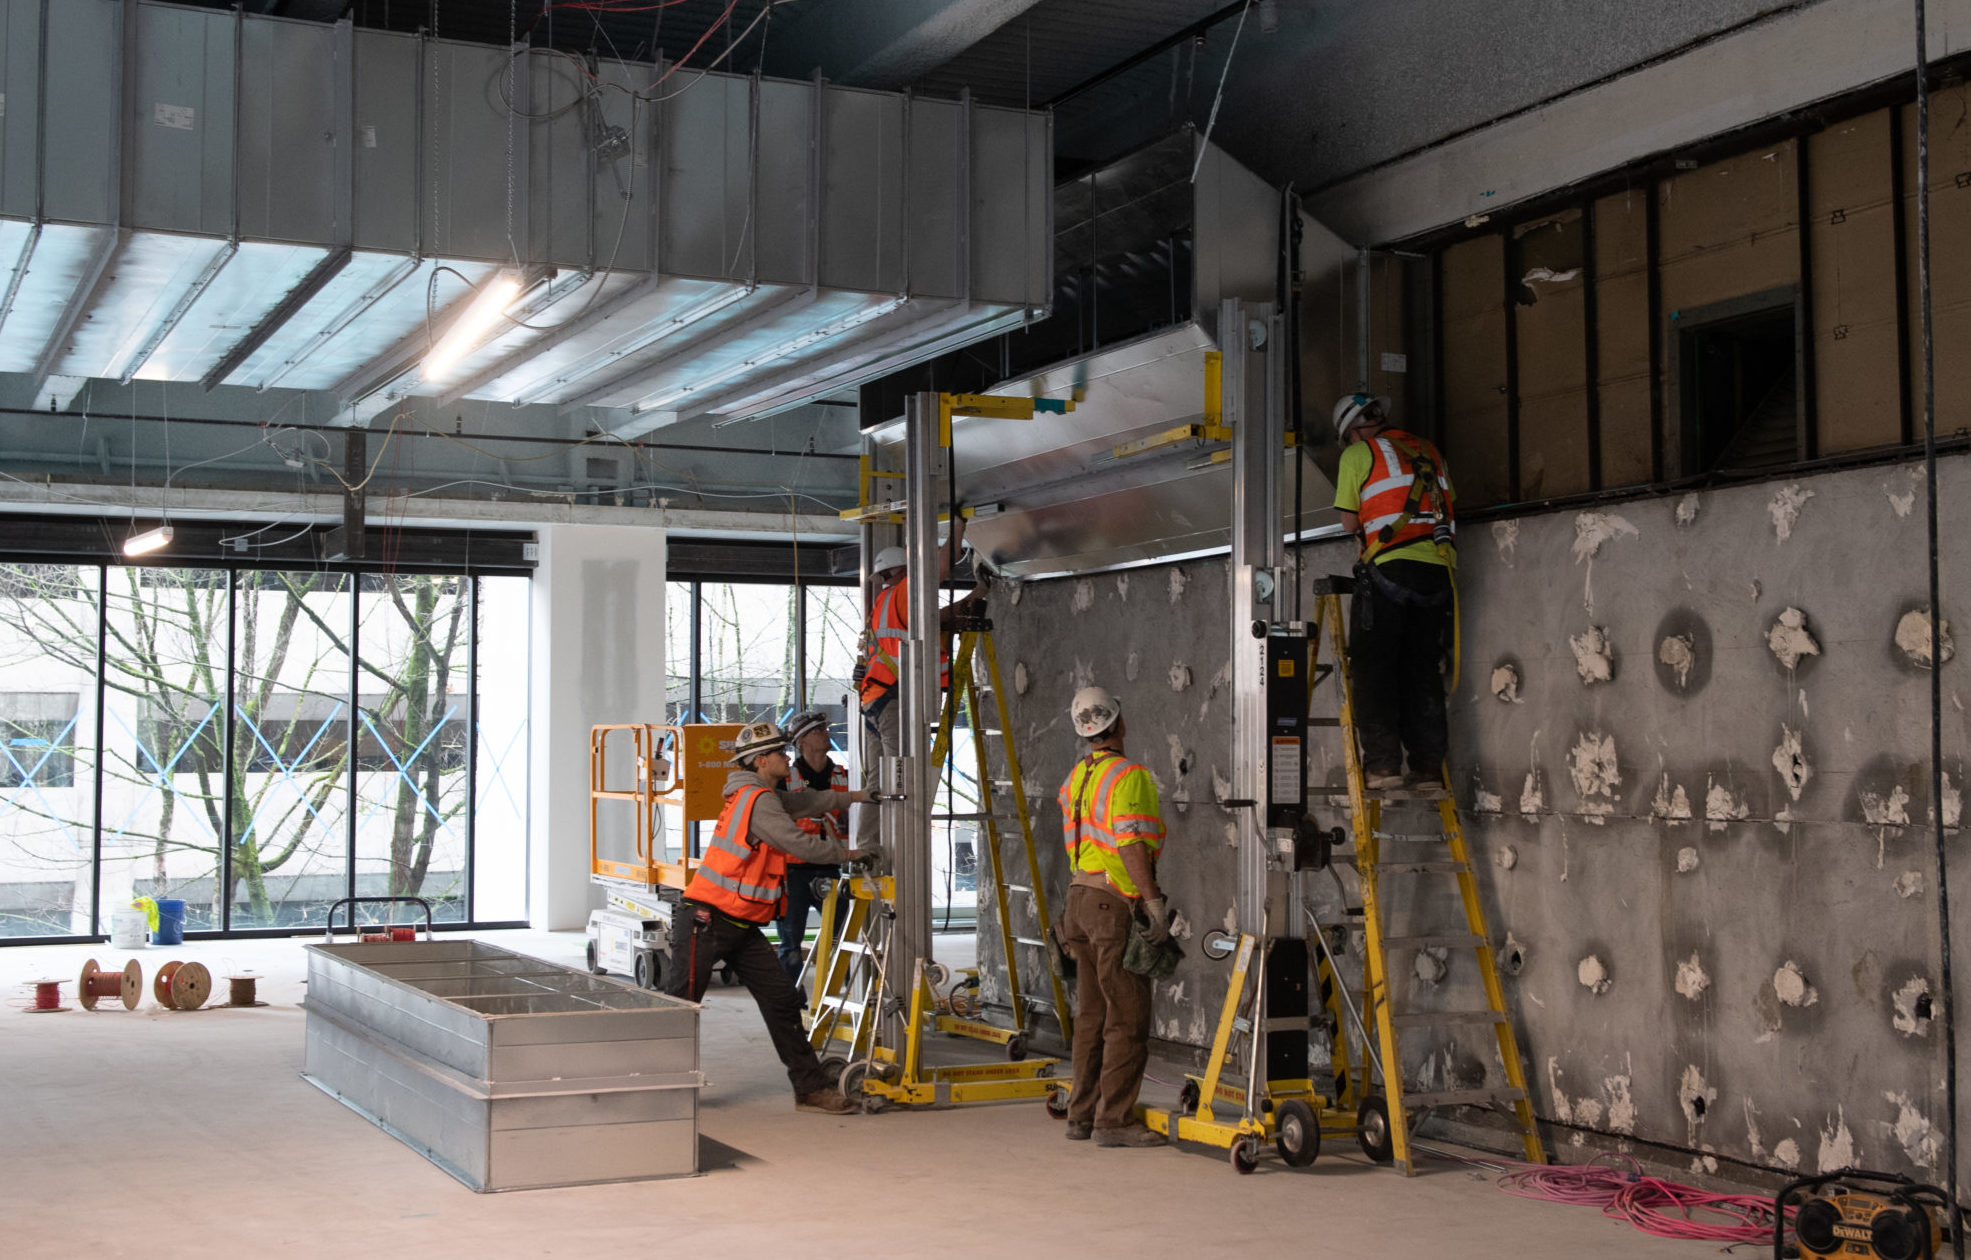 Streimer team members install large rectangular duct